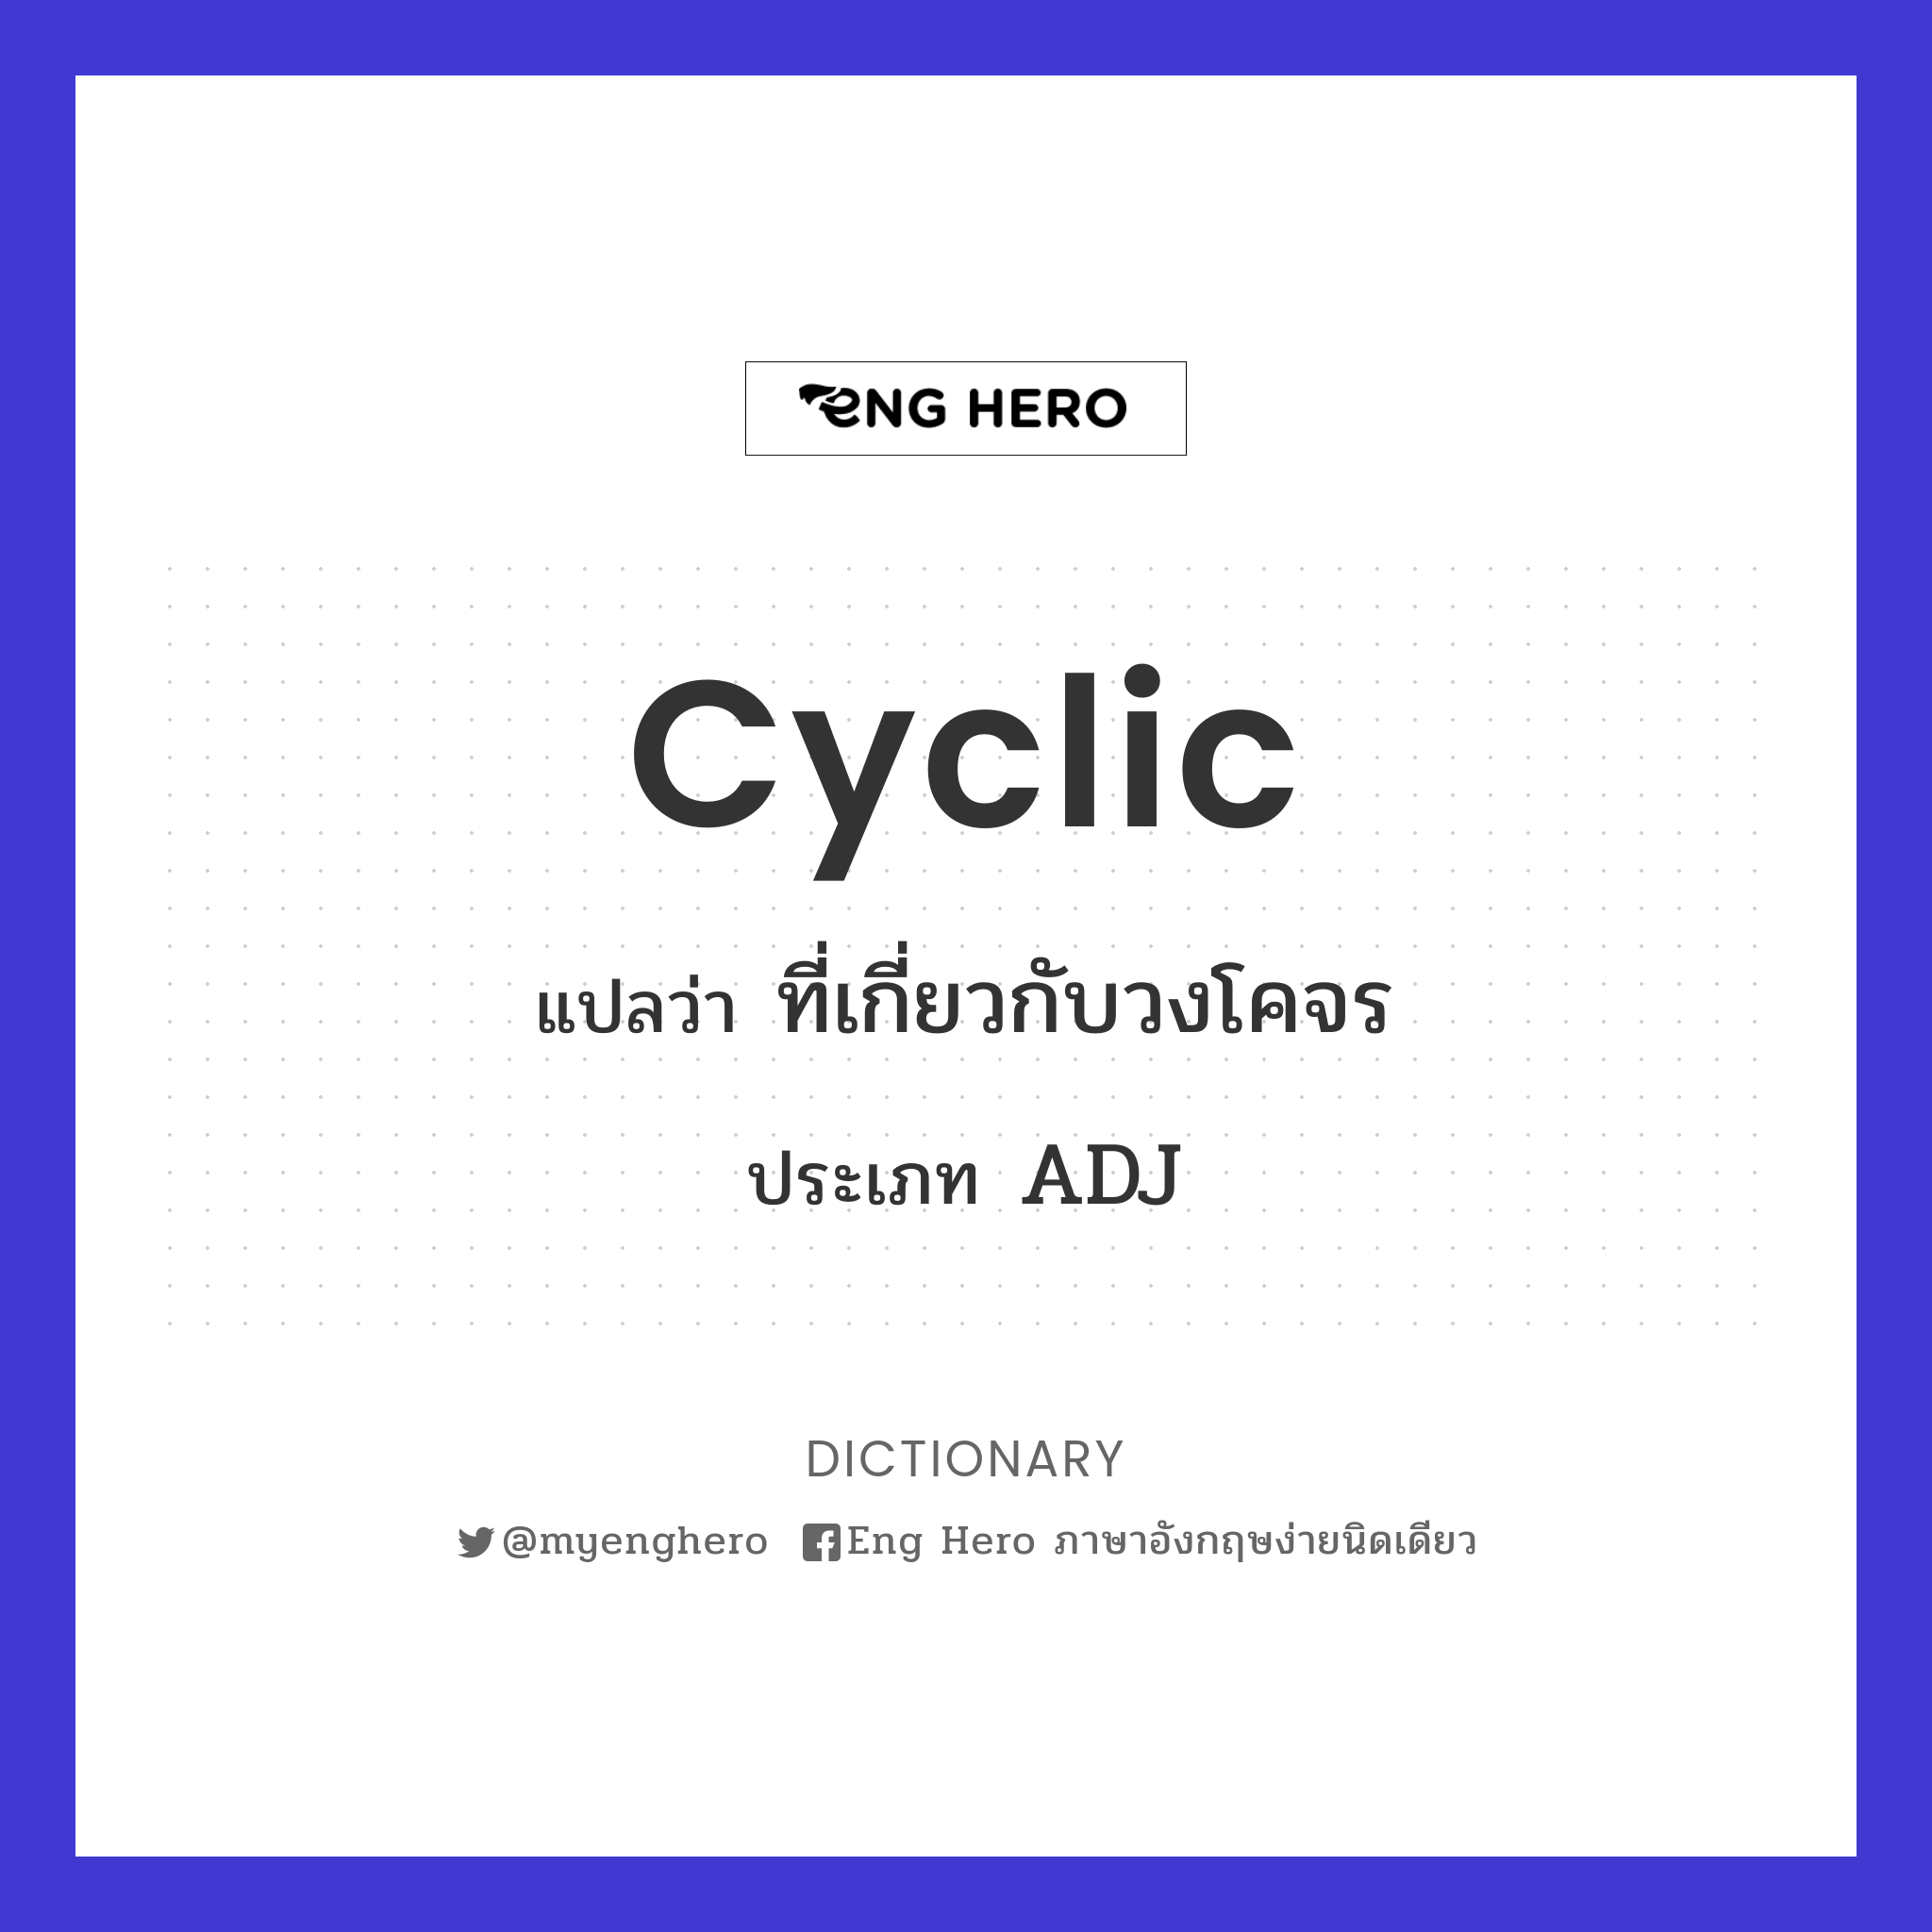 cyclic